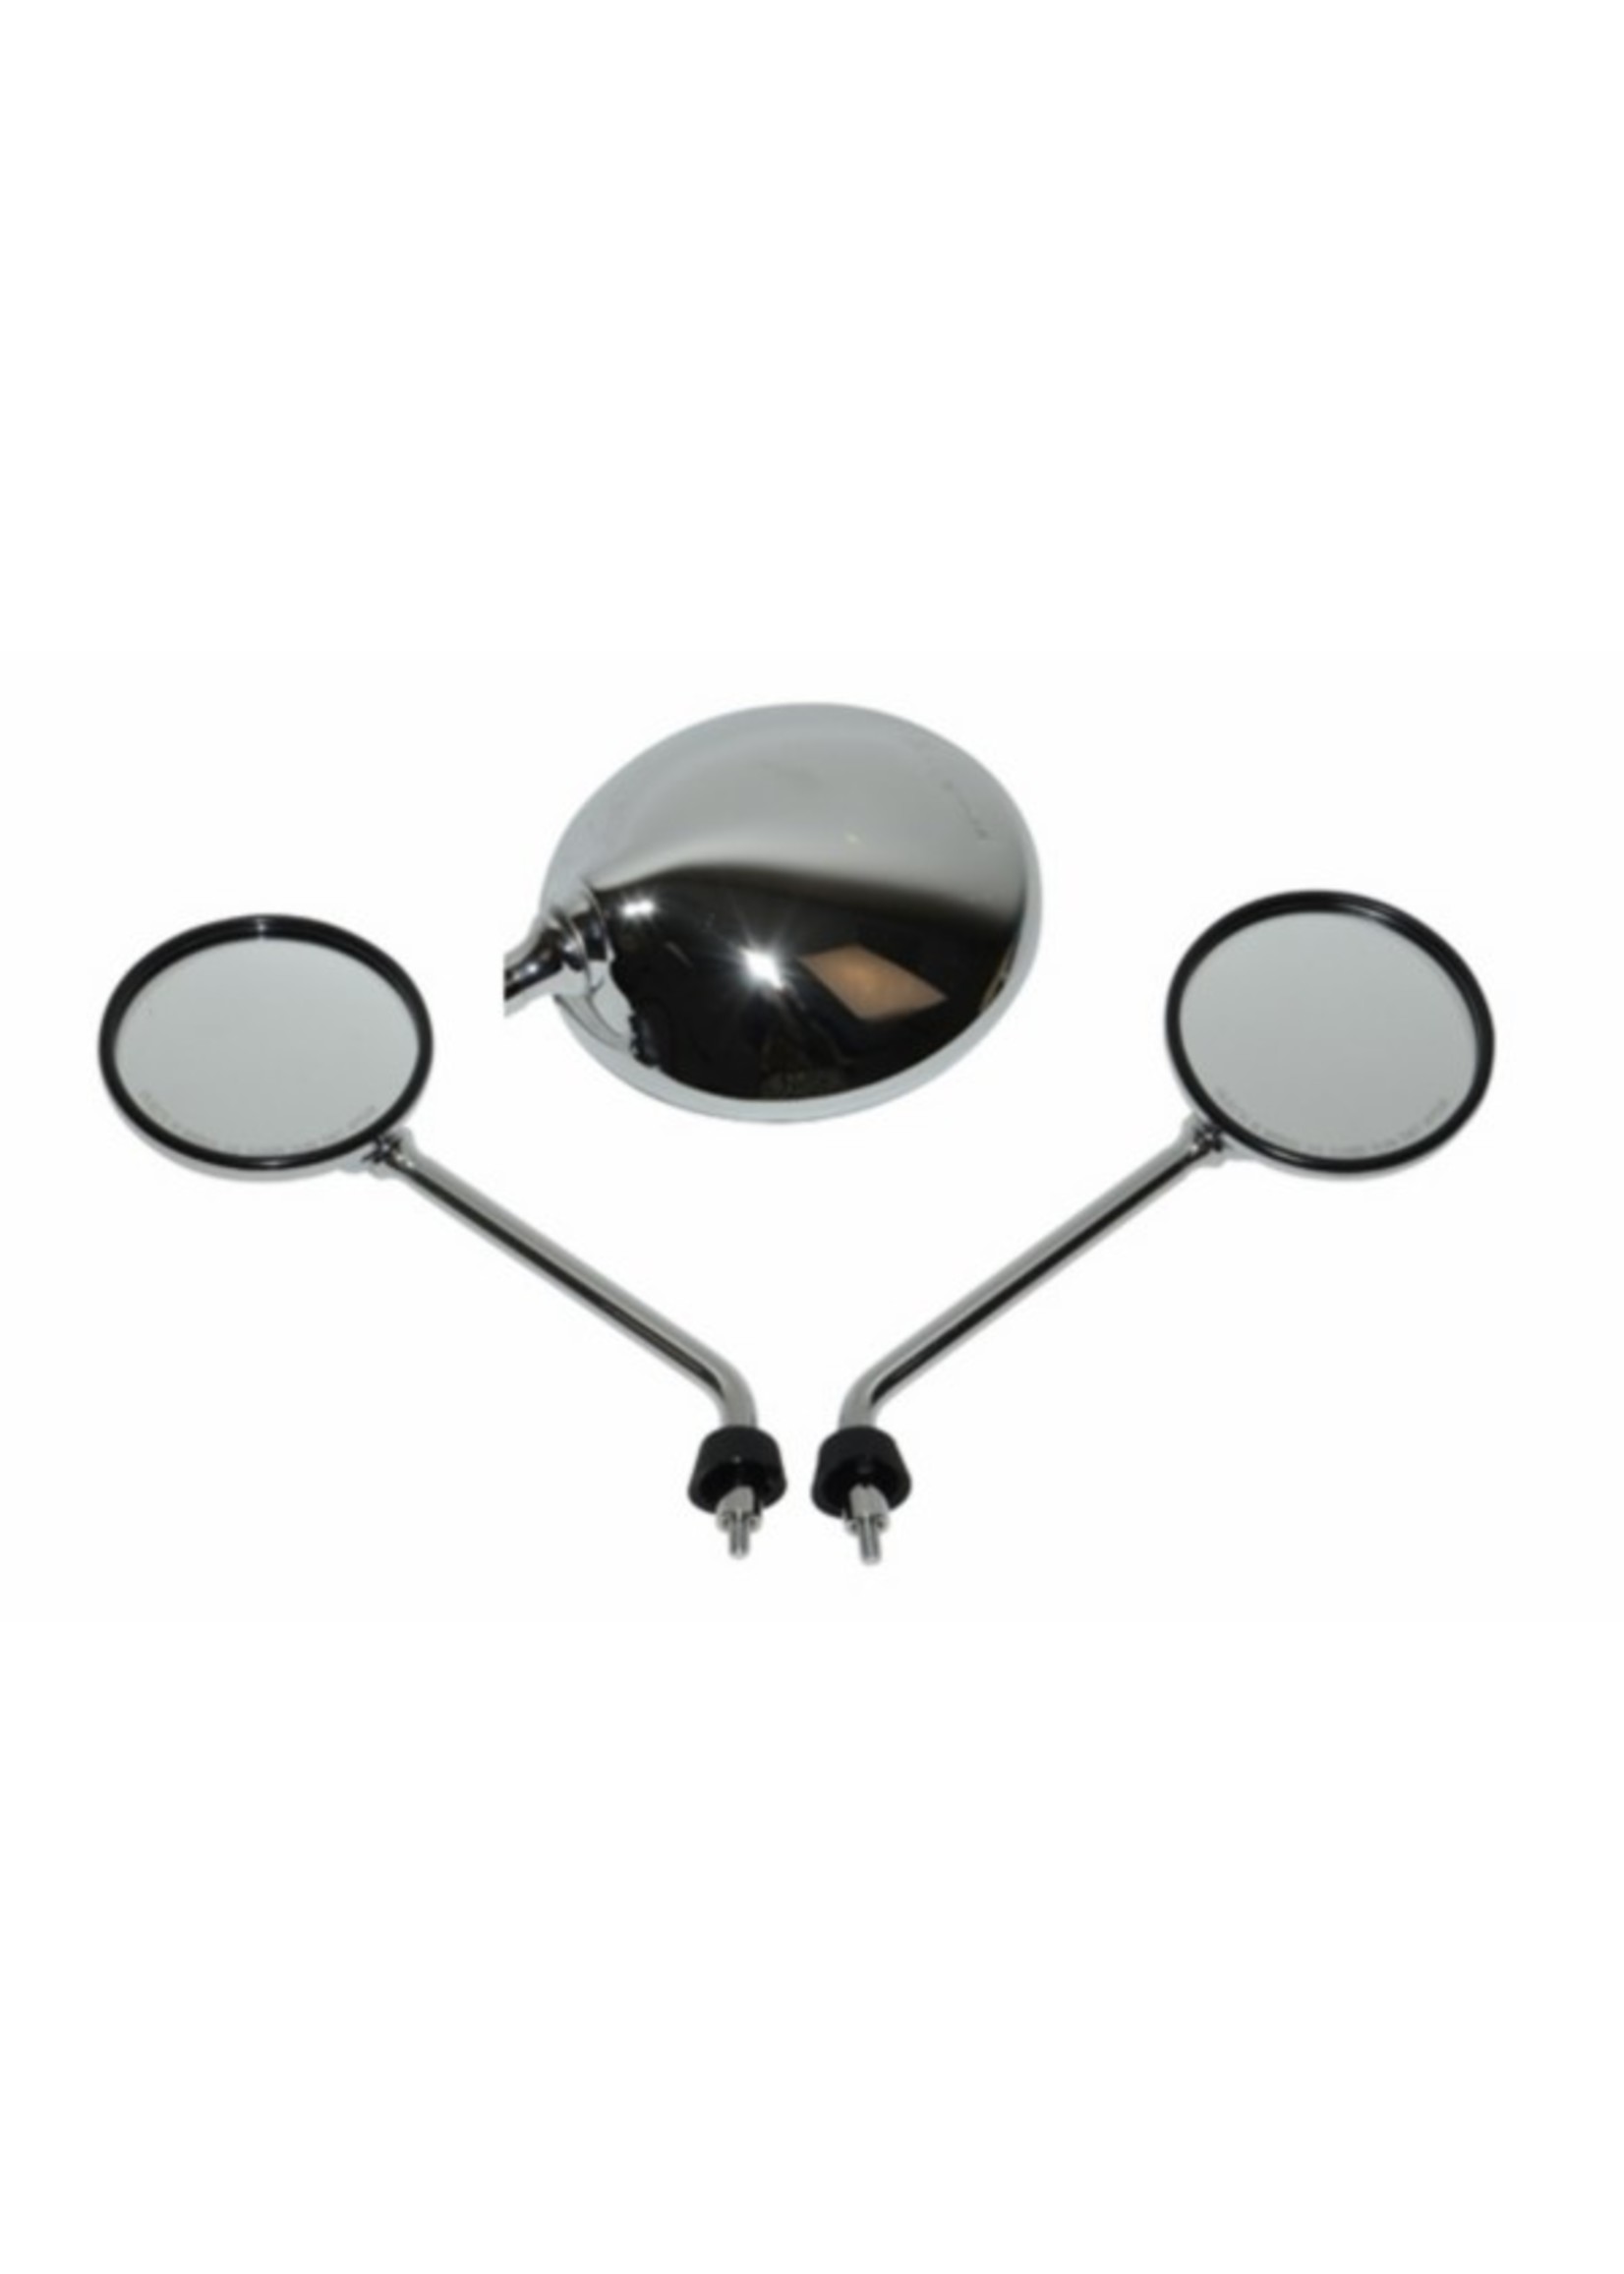 Piaggio spiegelset + schroefdraad mod. orig E-keur vespa lx m8